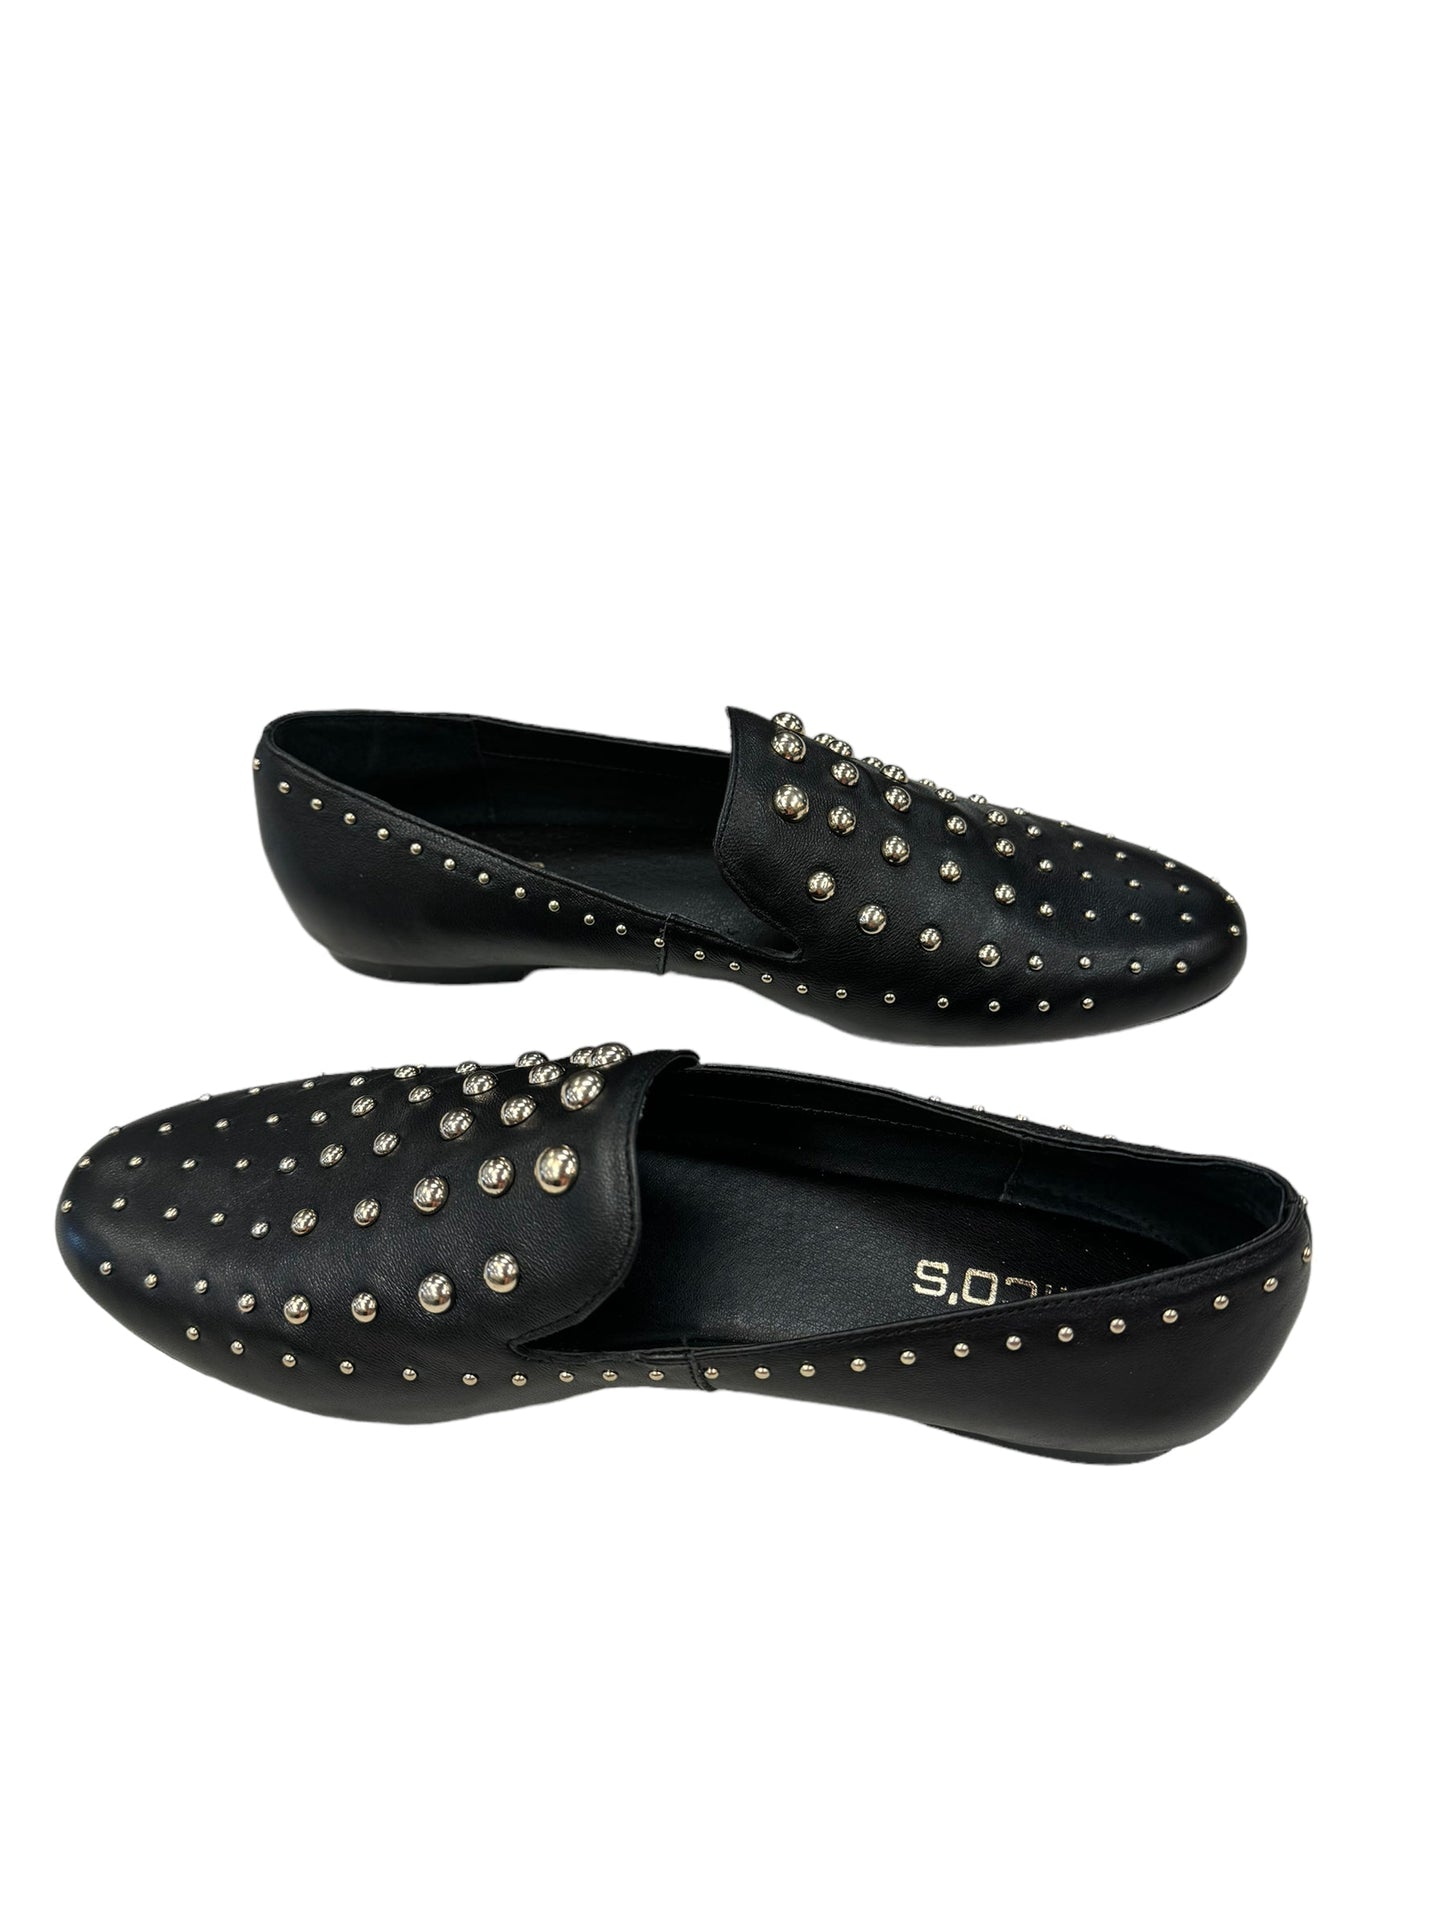 Black Shoes Flats Chicos, Size 8.5